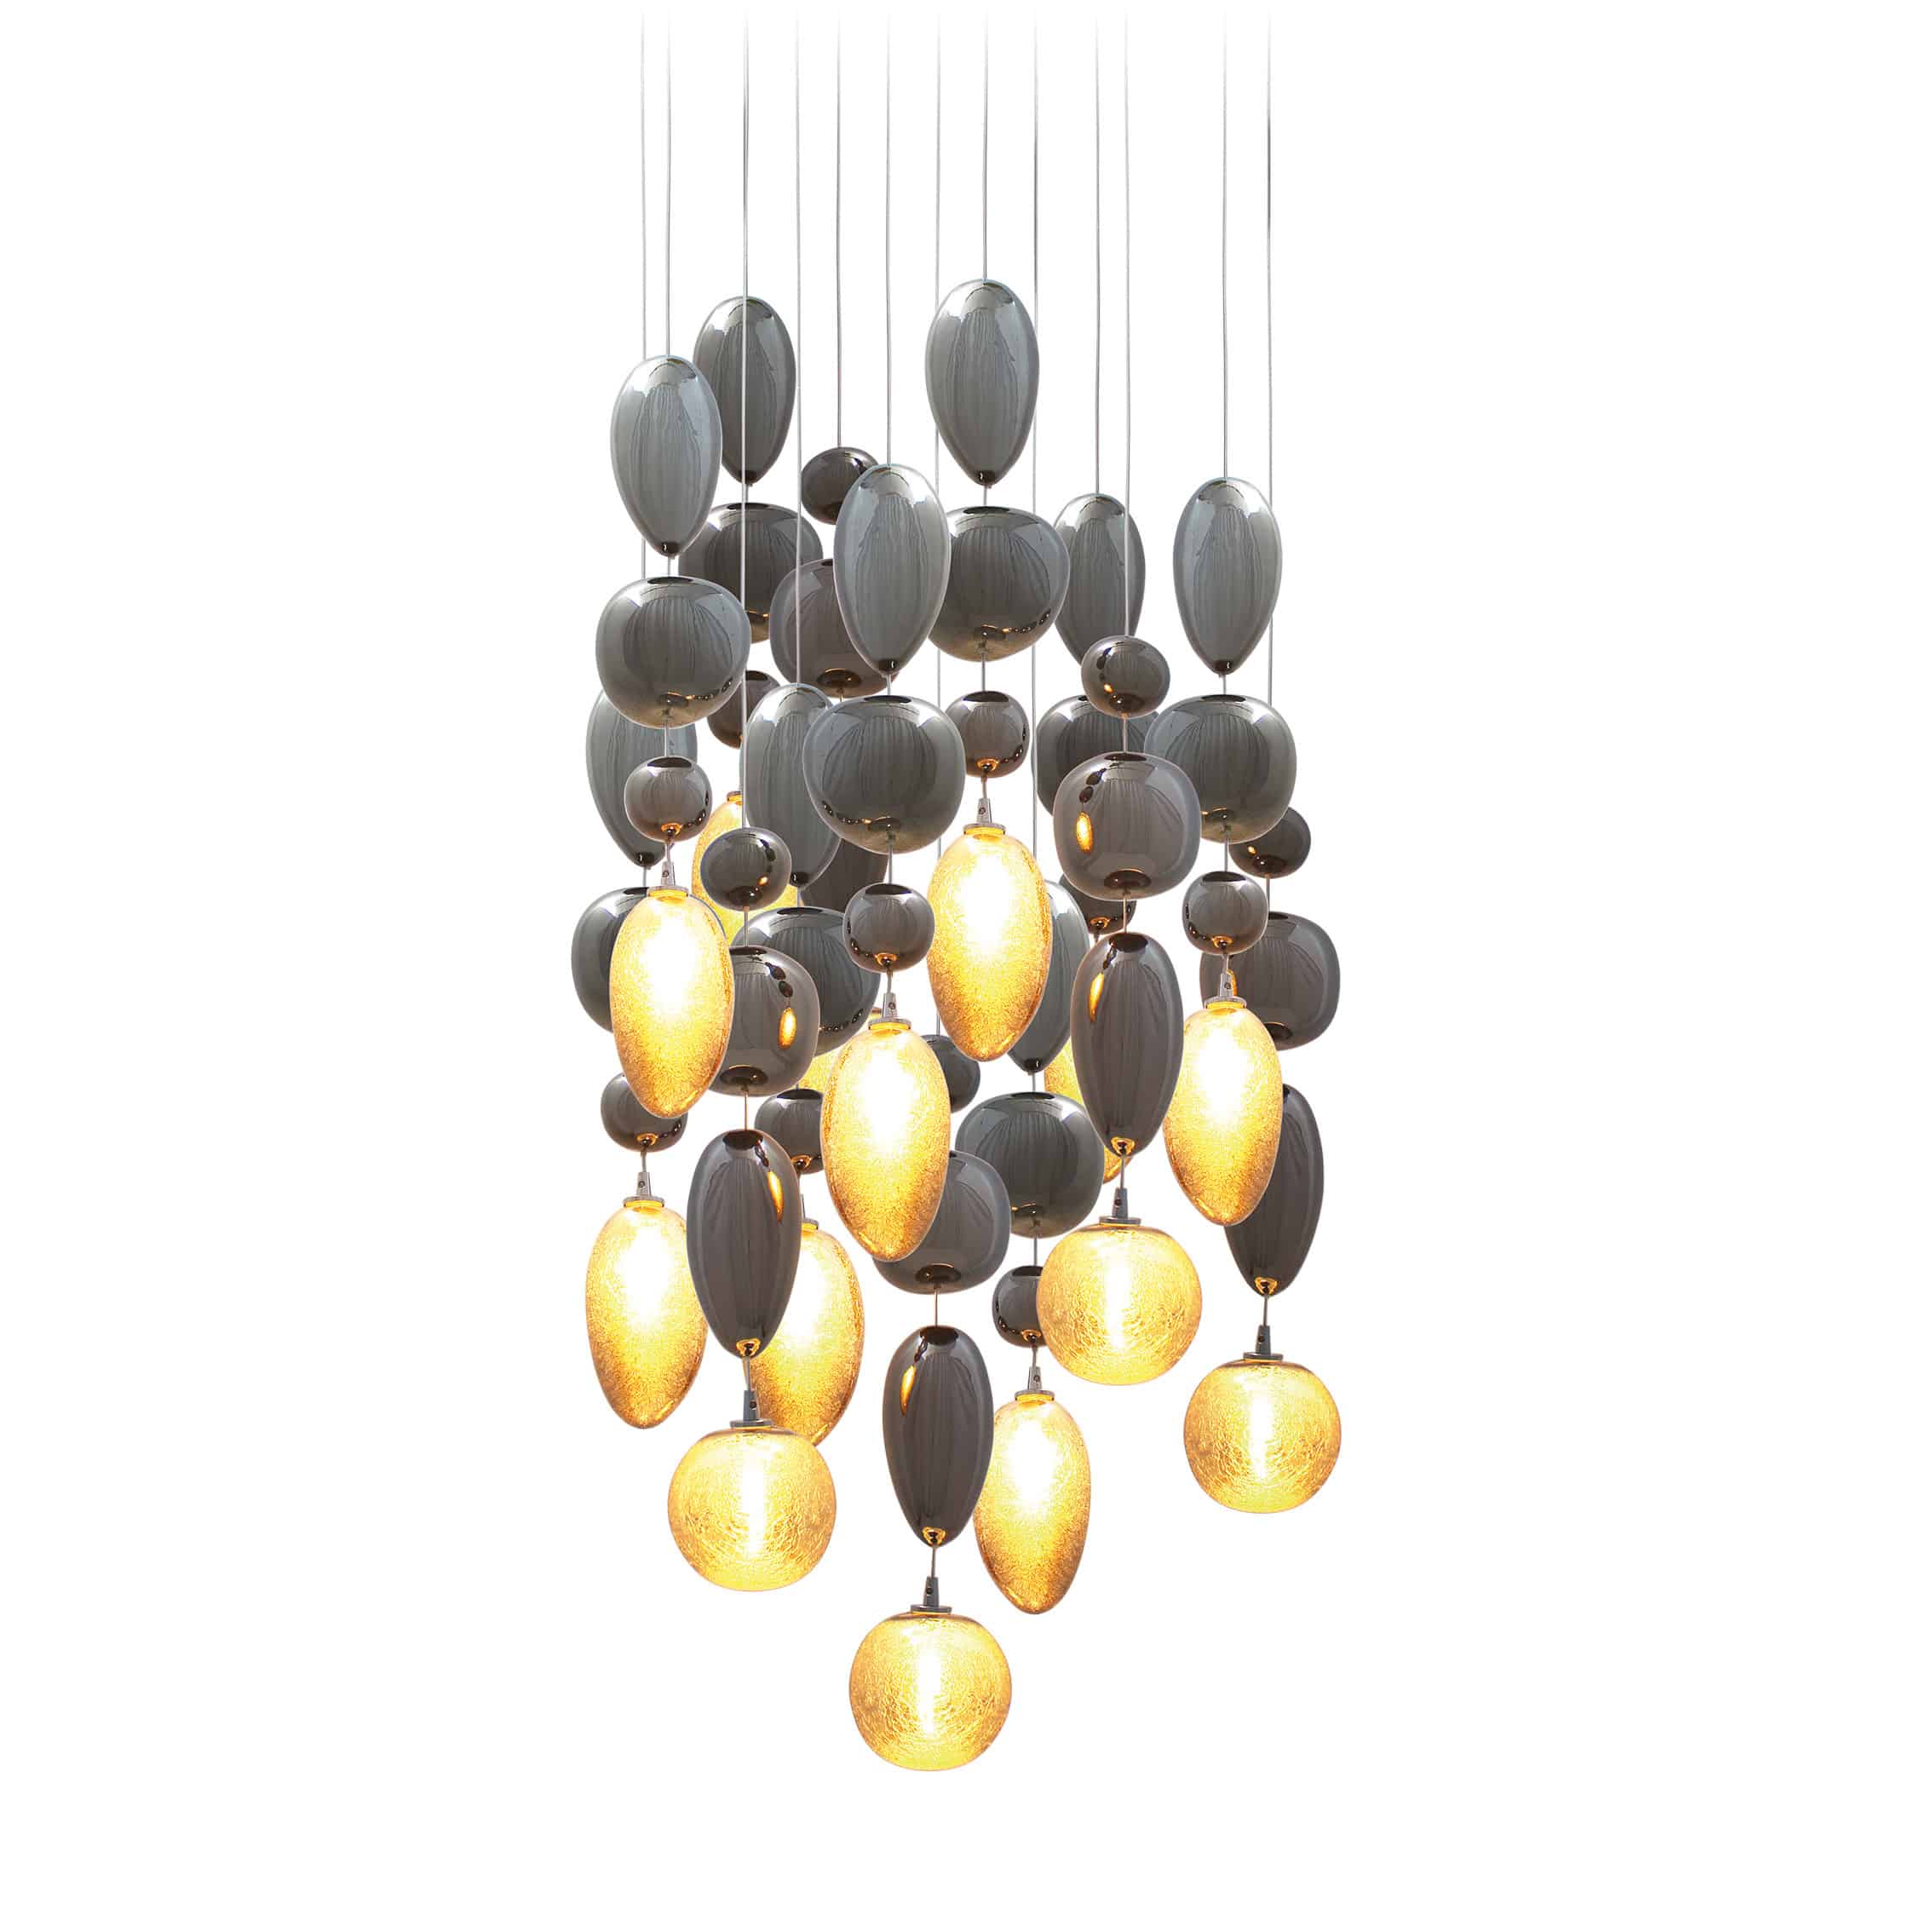 Glass Pendant light- with Murano glass hand blown spheres- styylish